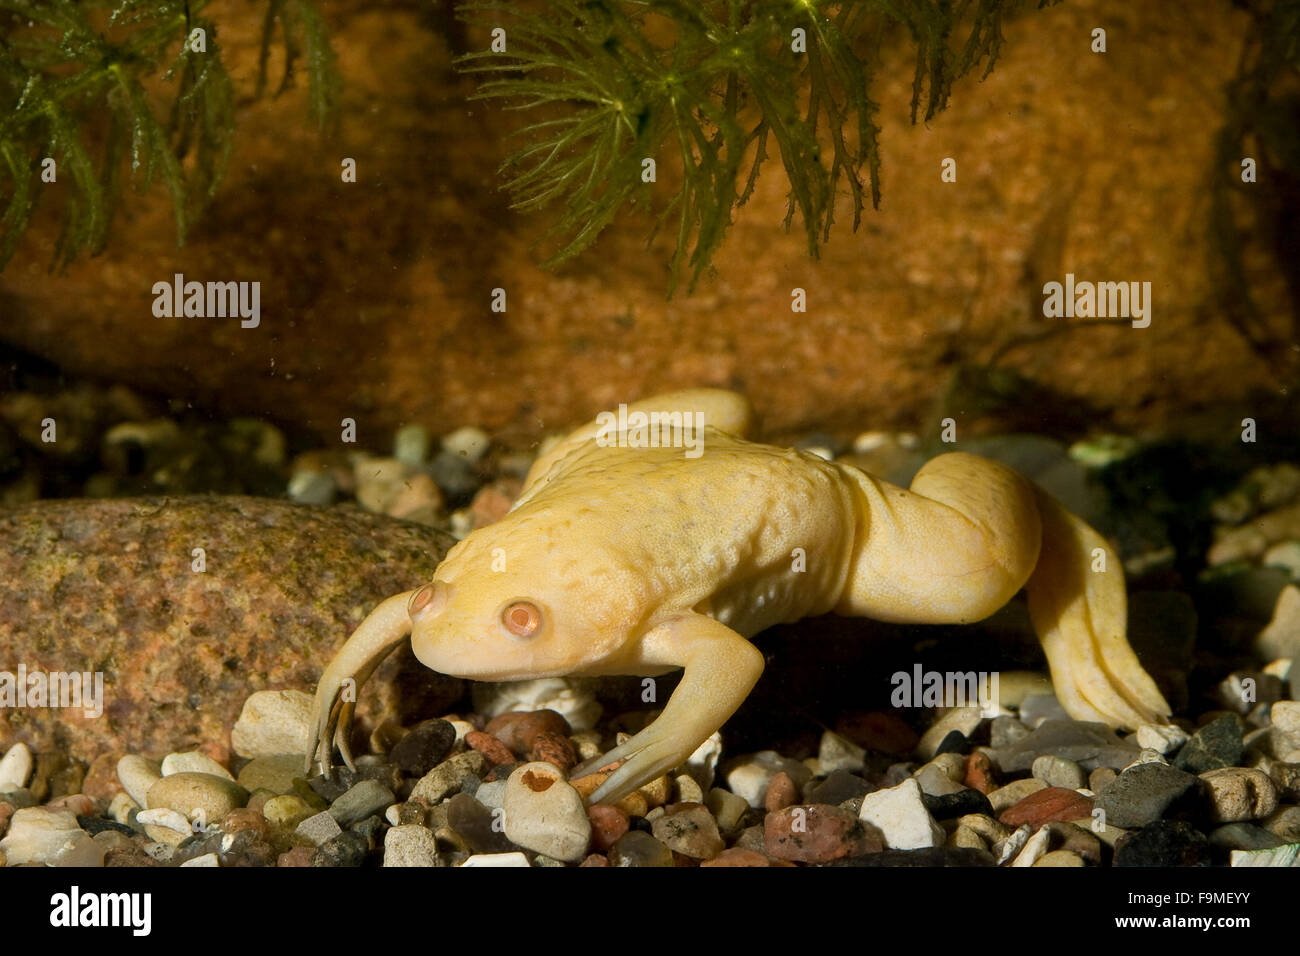 African clawed frog, Großer Krallenfrosch, Glatter Krallenfrosch, Frosch, Albino, albinotische Form, Albino, Xenopus laevis Stock Photo